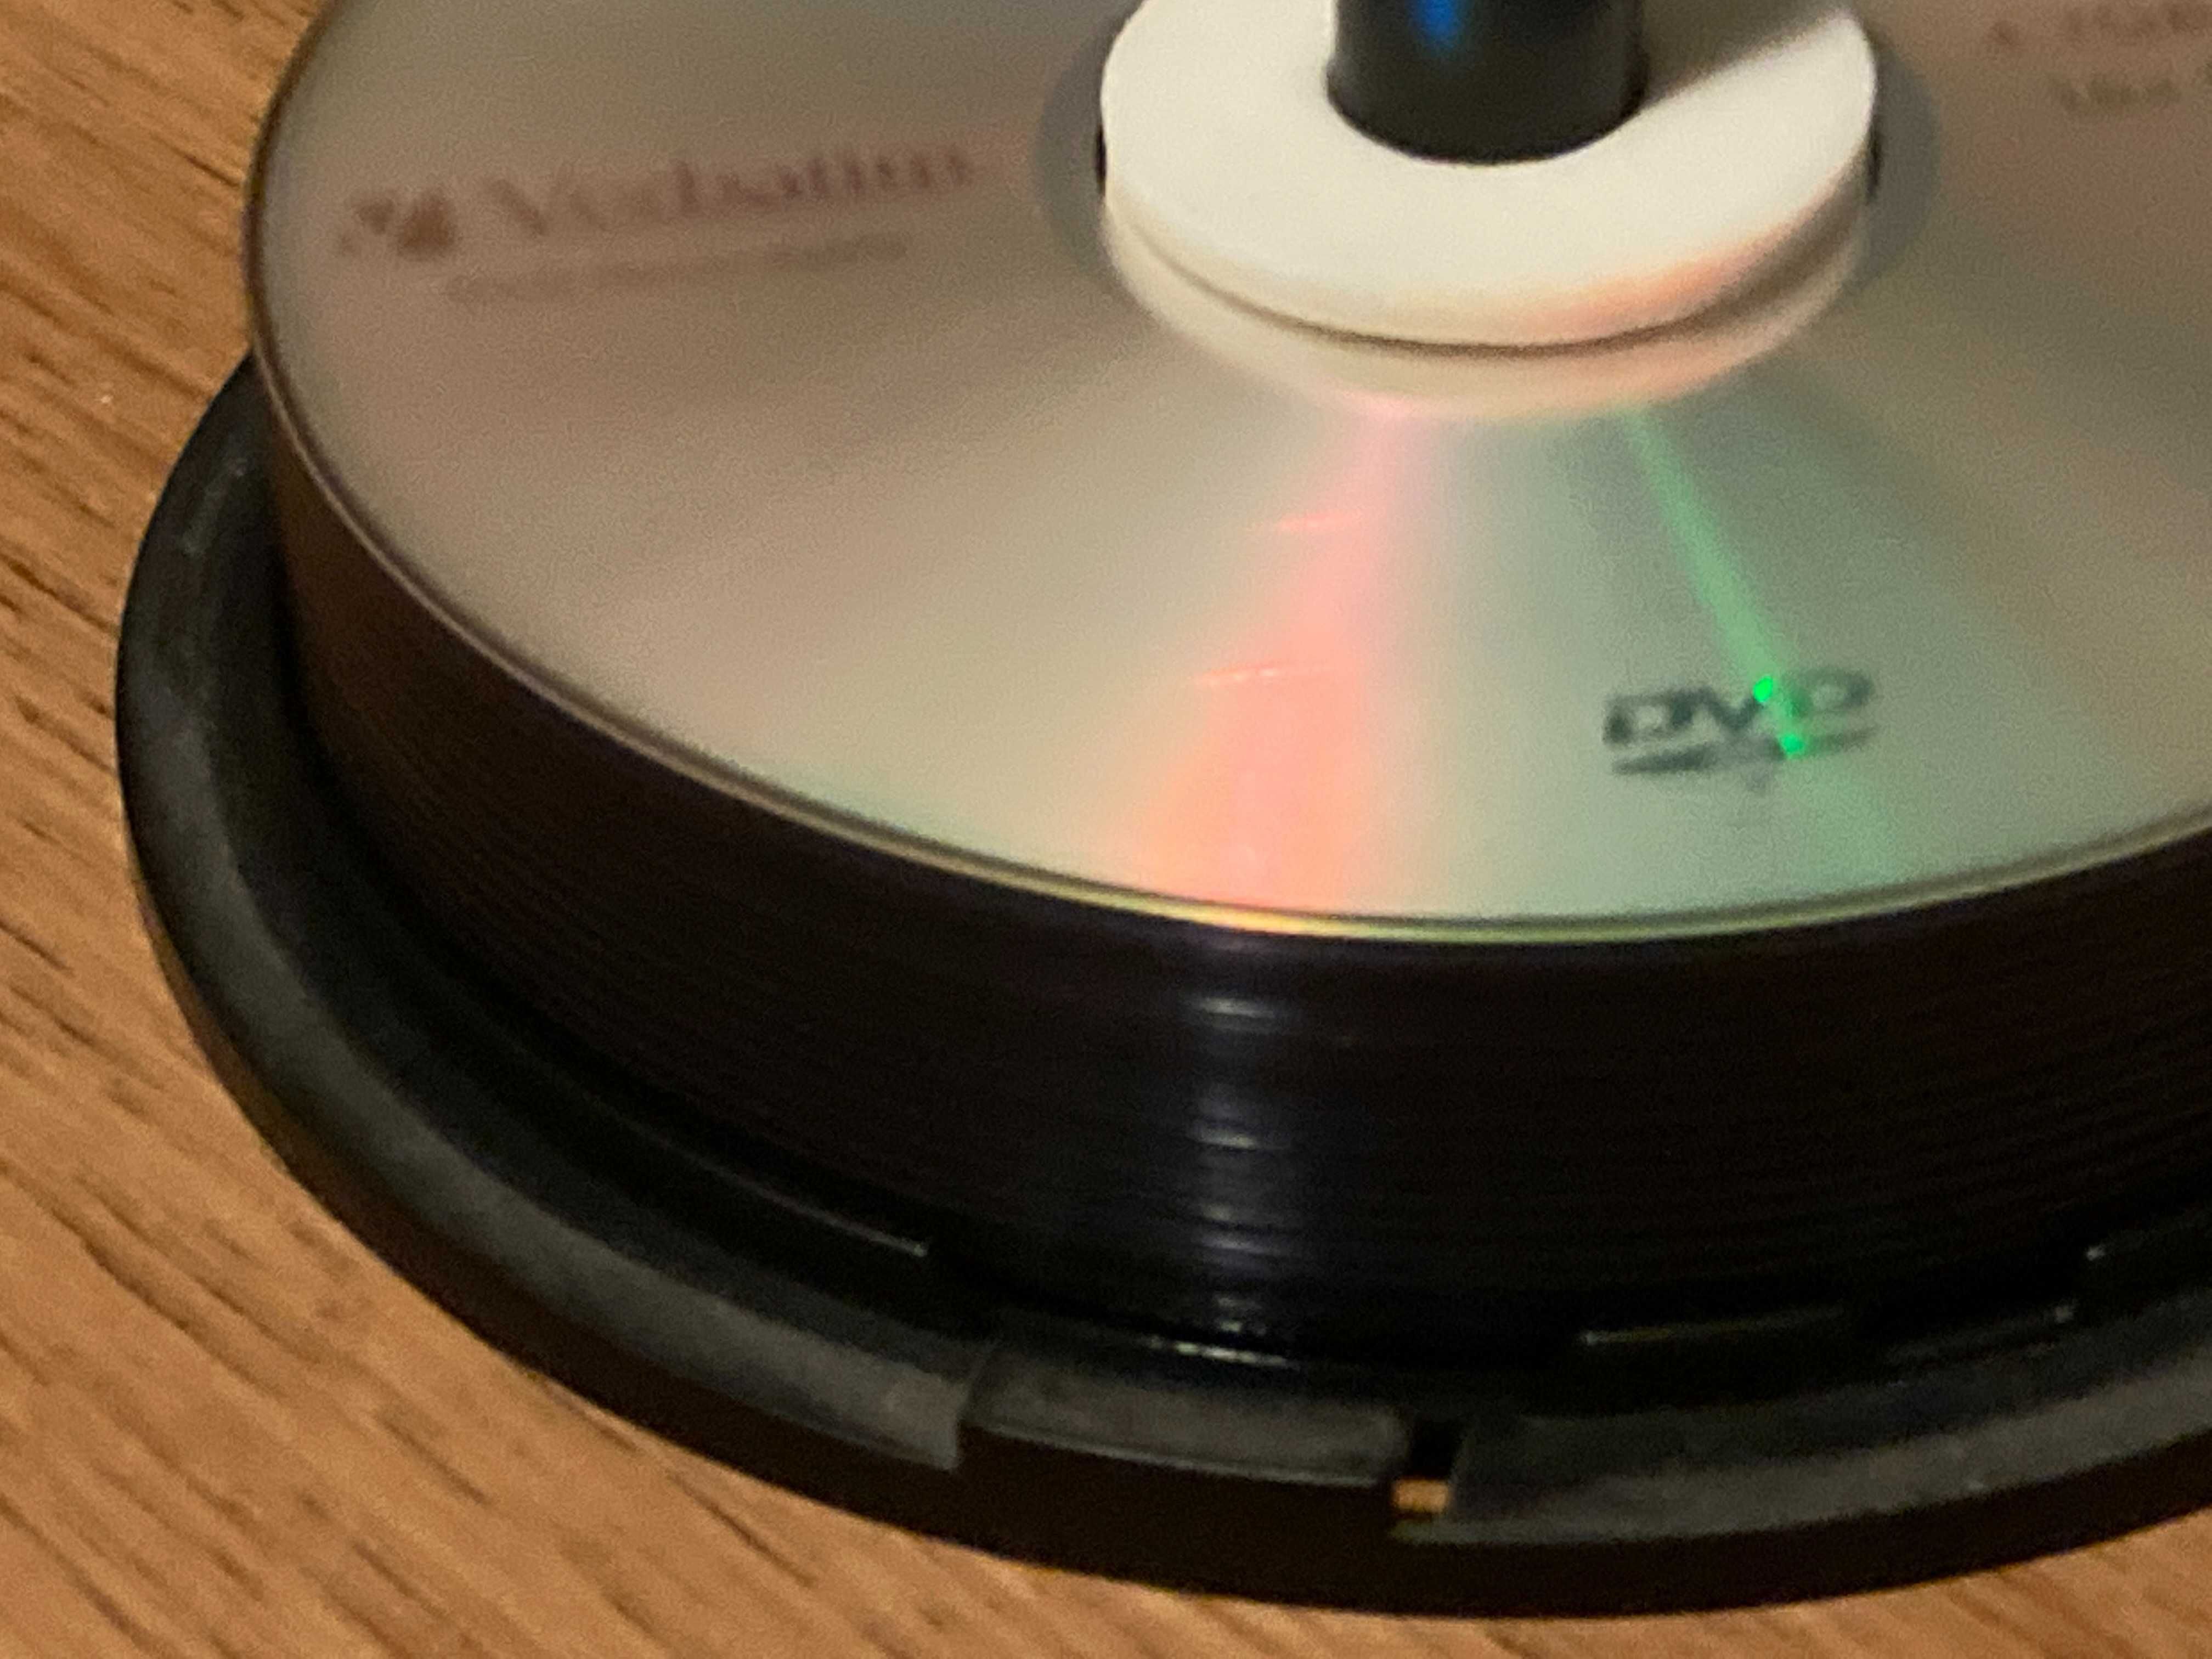 15 DVDs Verbatim para gravar